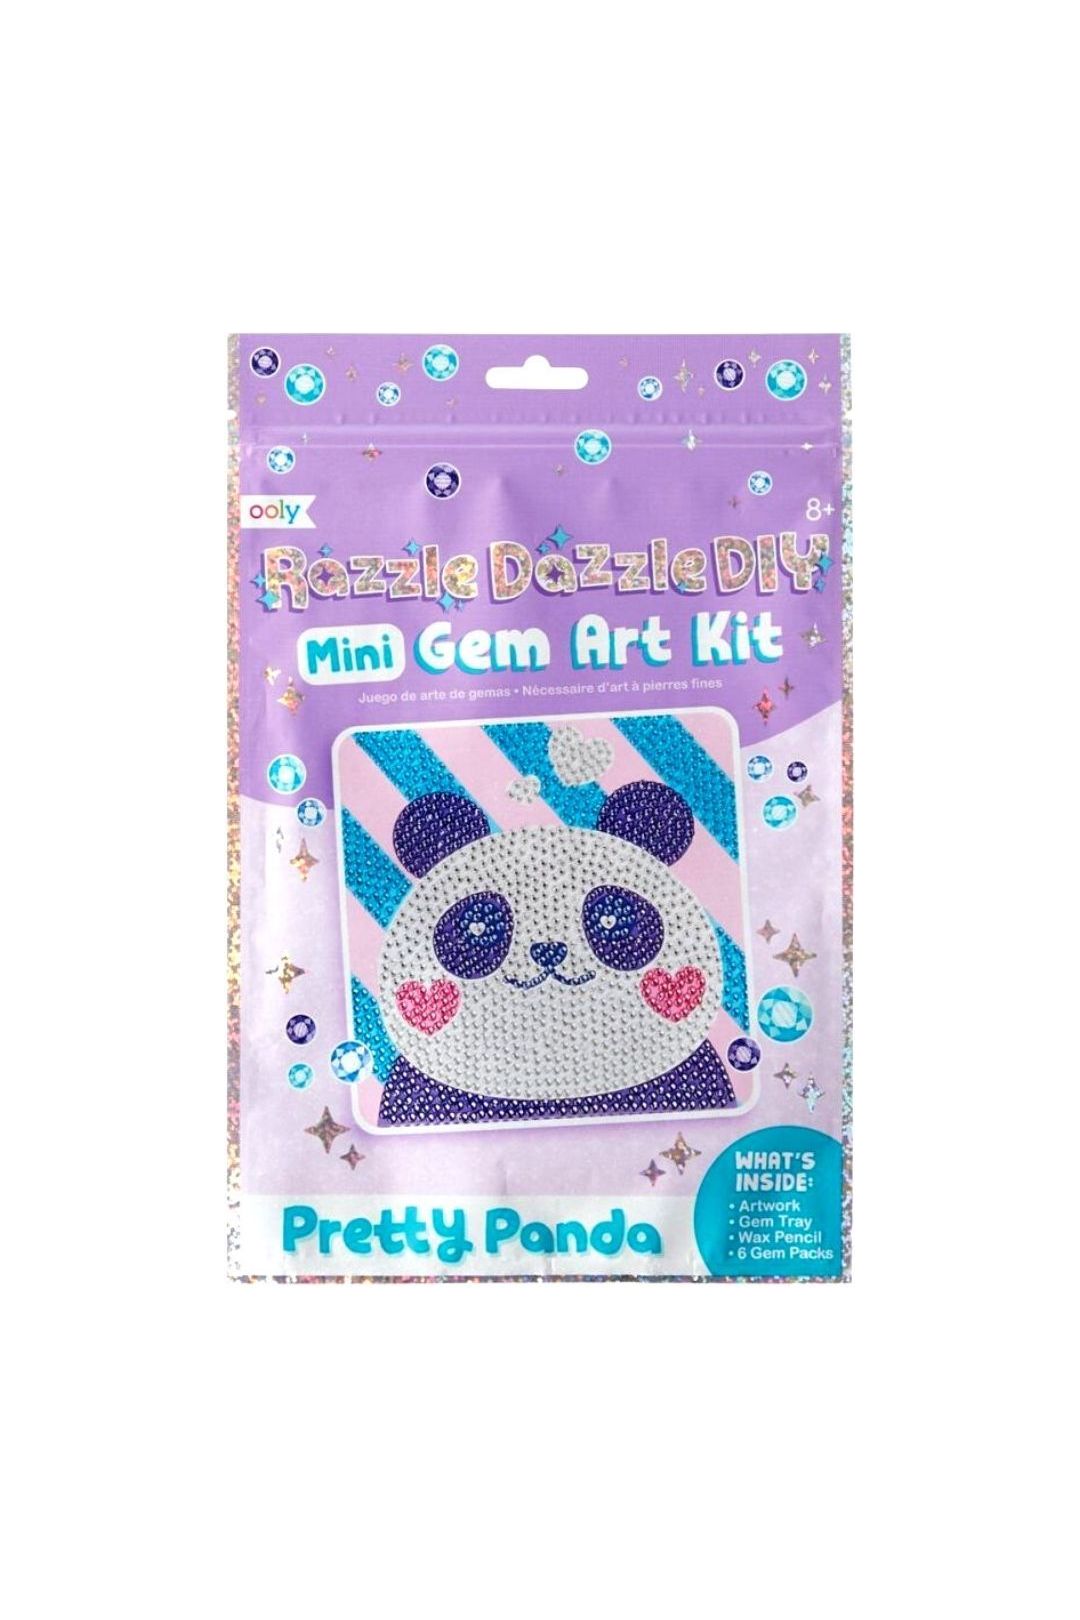 Razzle Dazzle Mini DIY Gem Art Kit - Pretty Panda